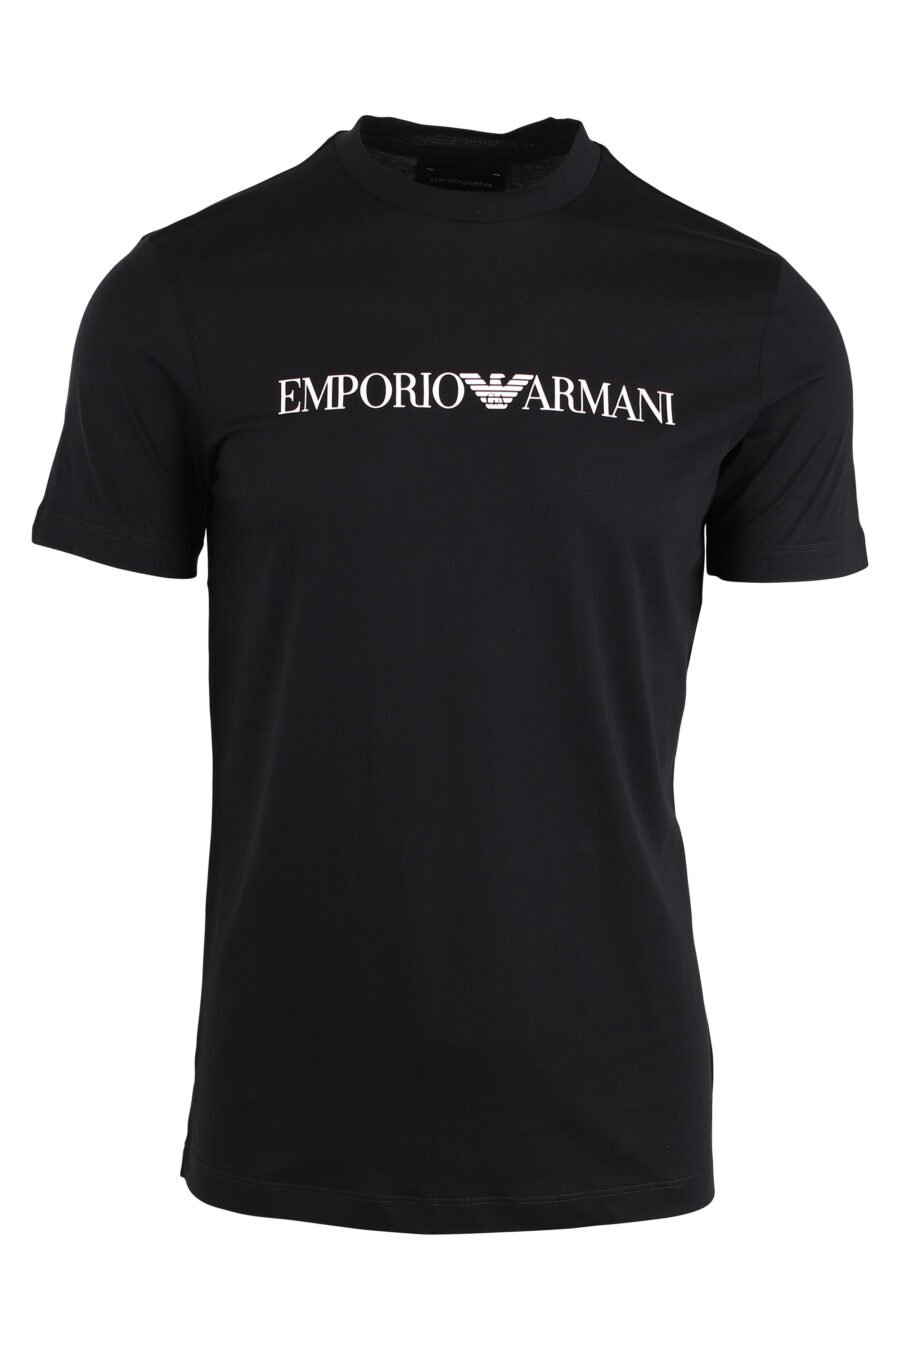 Emporio Armani - Camiseta negra con maxilogo letras blancas - BLS Fashion